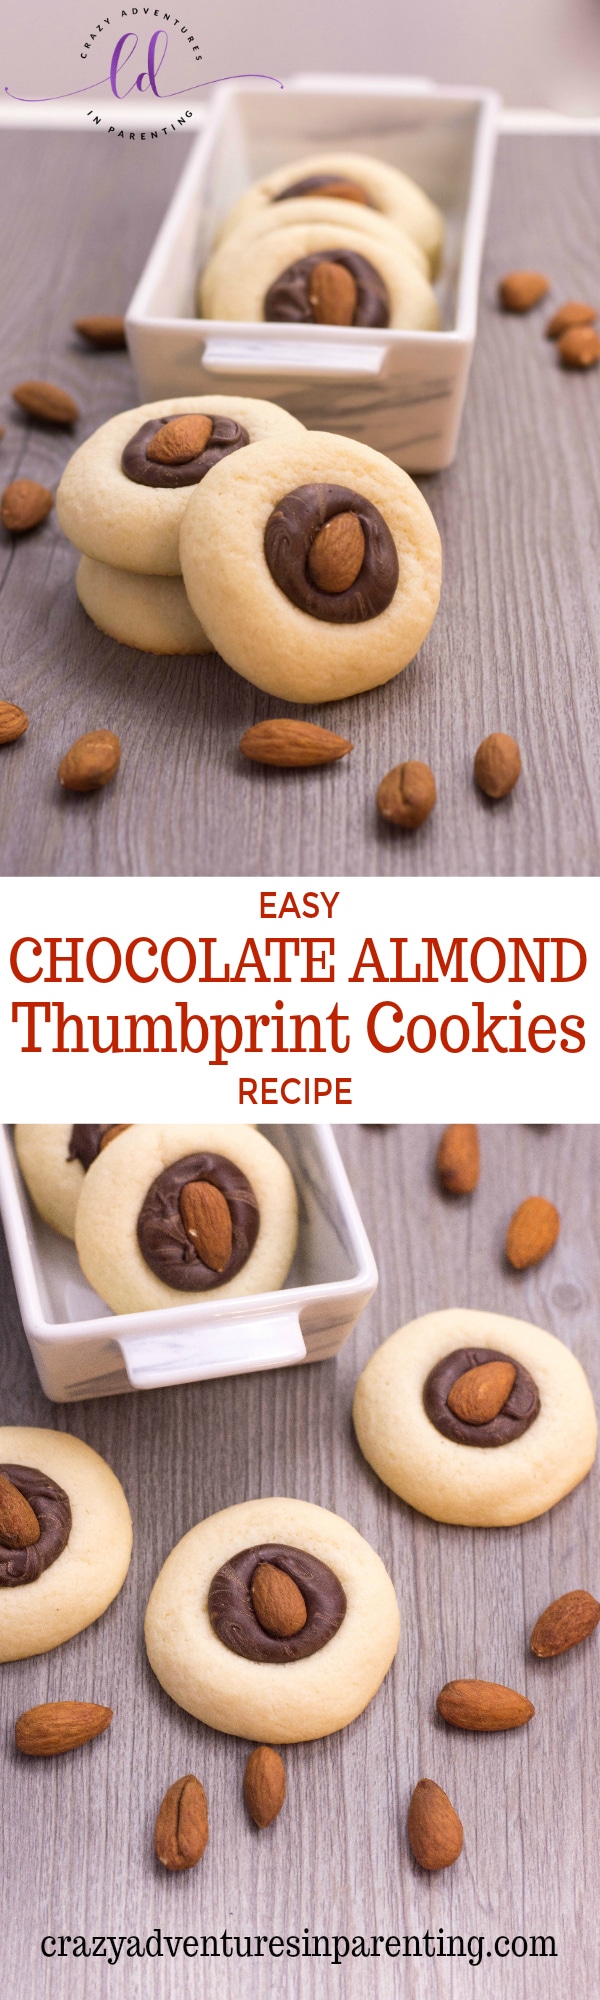 Easy Chocolate Almond Thumbprint Cookies Recipe